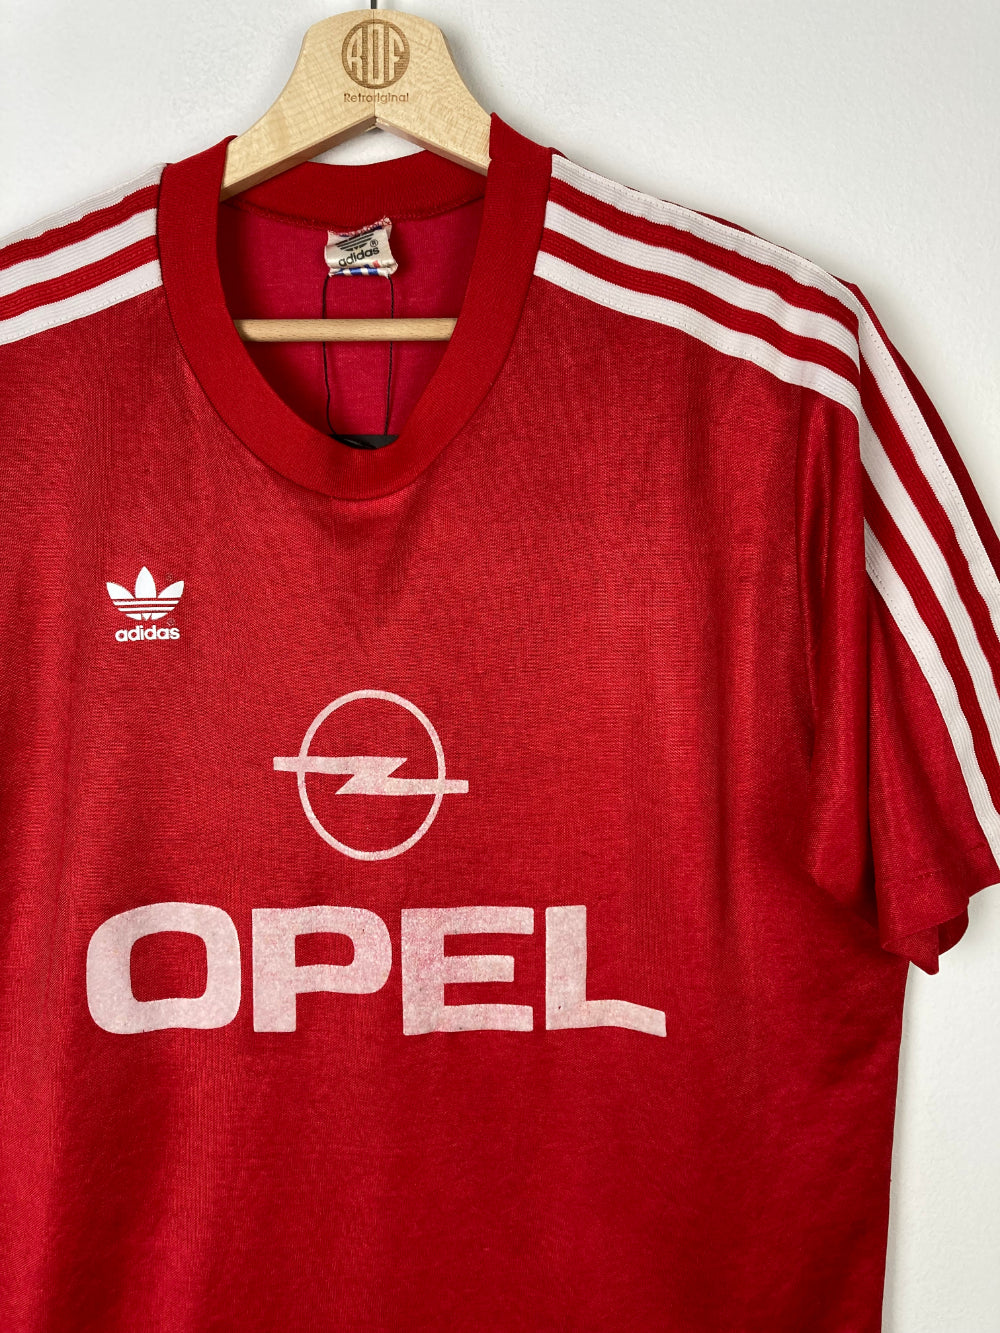 
                  
                    Original FC Bayern München Home Jersey 1990-1991 - XL fits M
                  
                